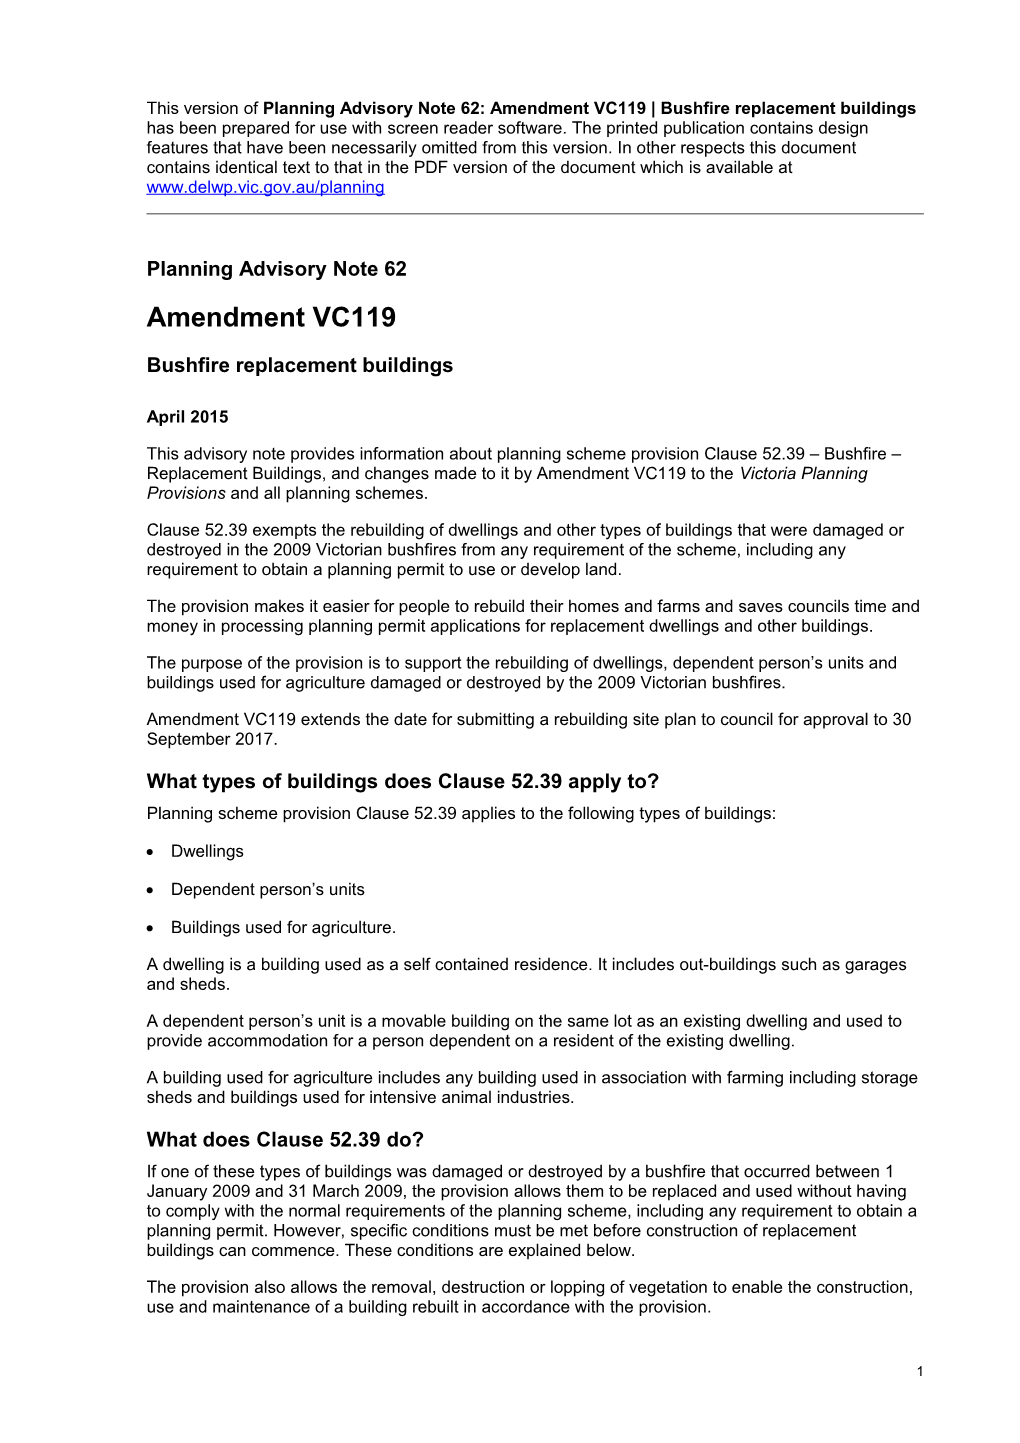 Planning Advisory Note 62: Amendment VC119 Bushfire Replacement Buildings